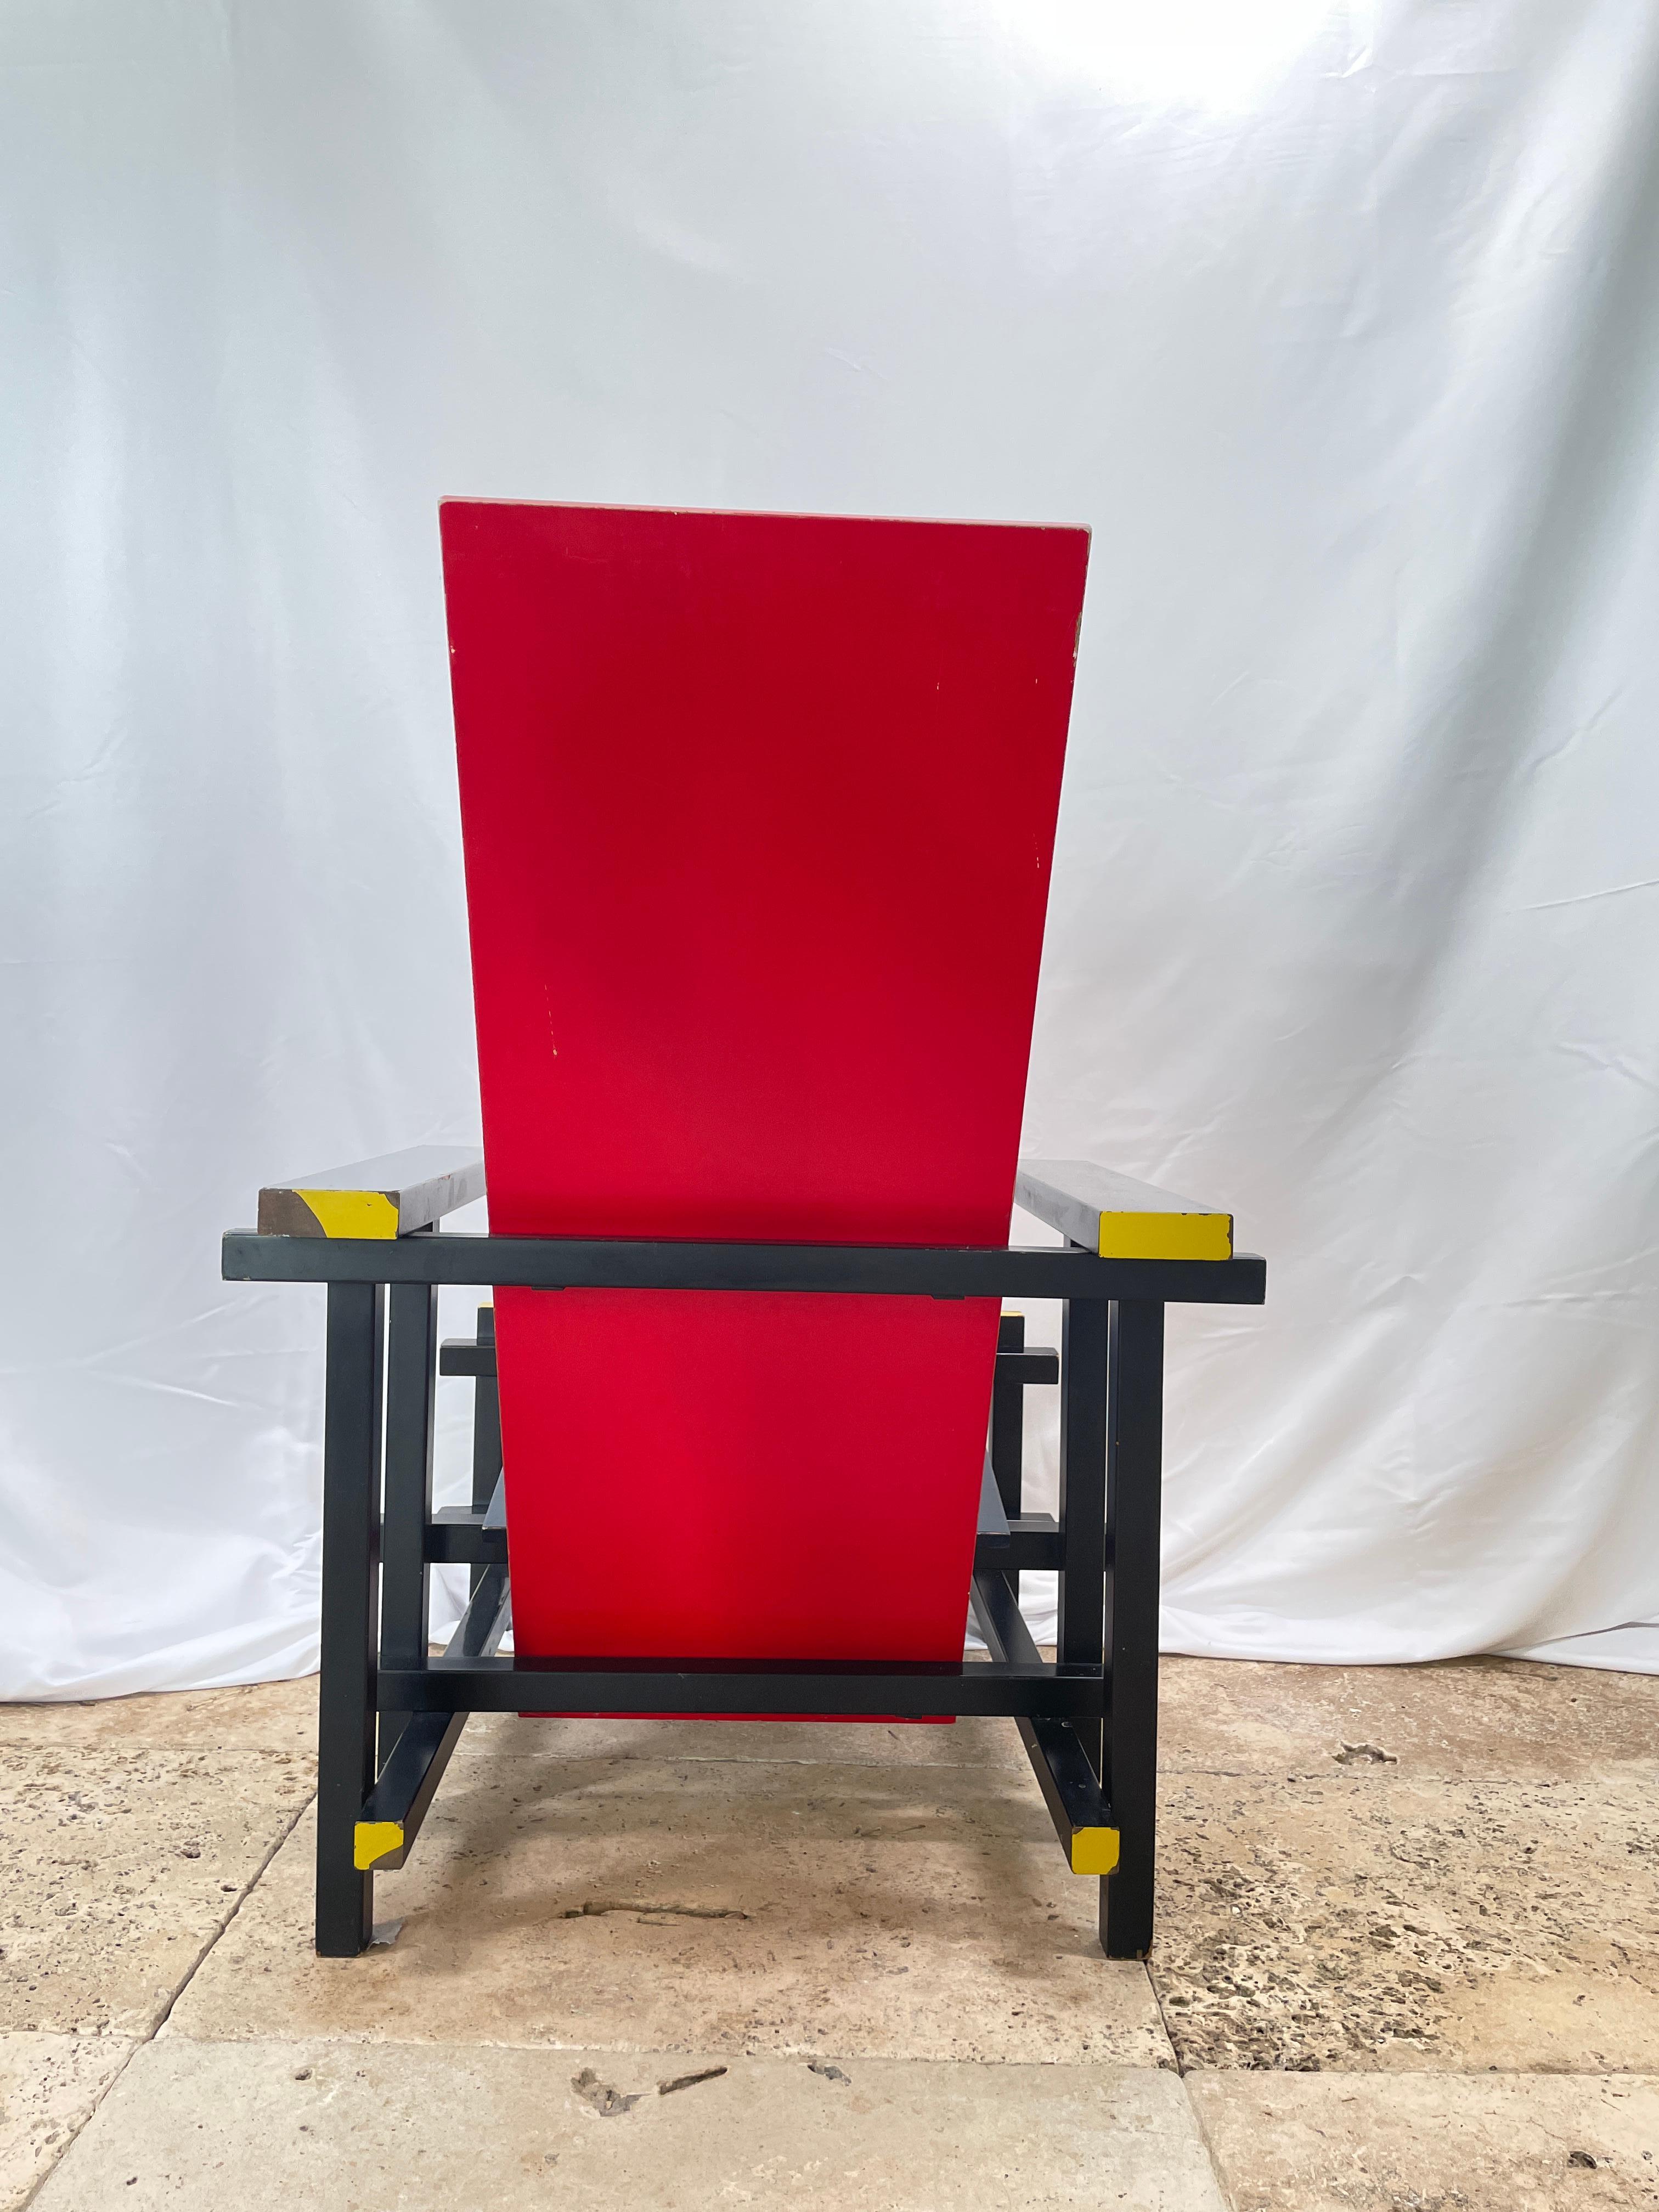 de stijl art movement’s angu­lar red and blue chair